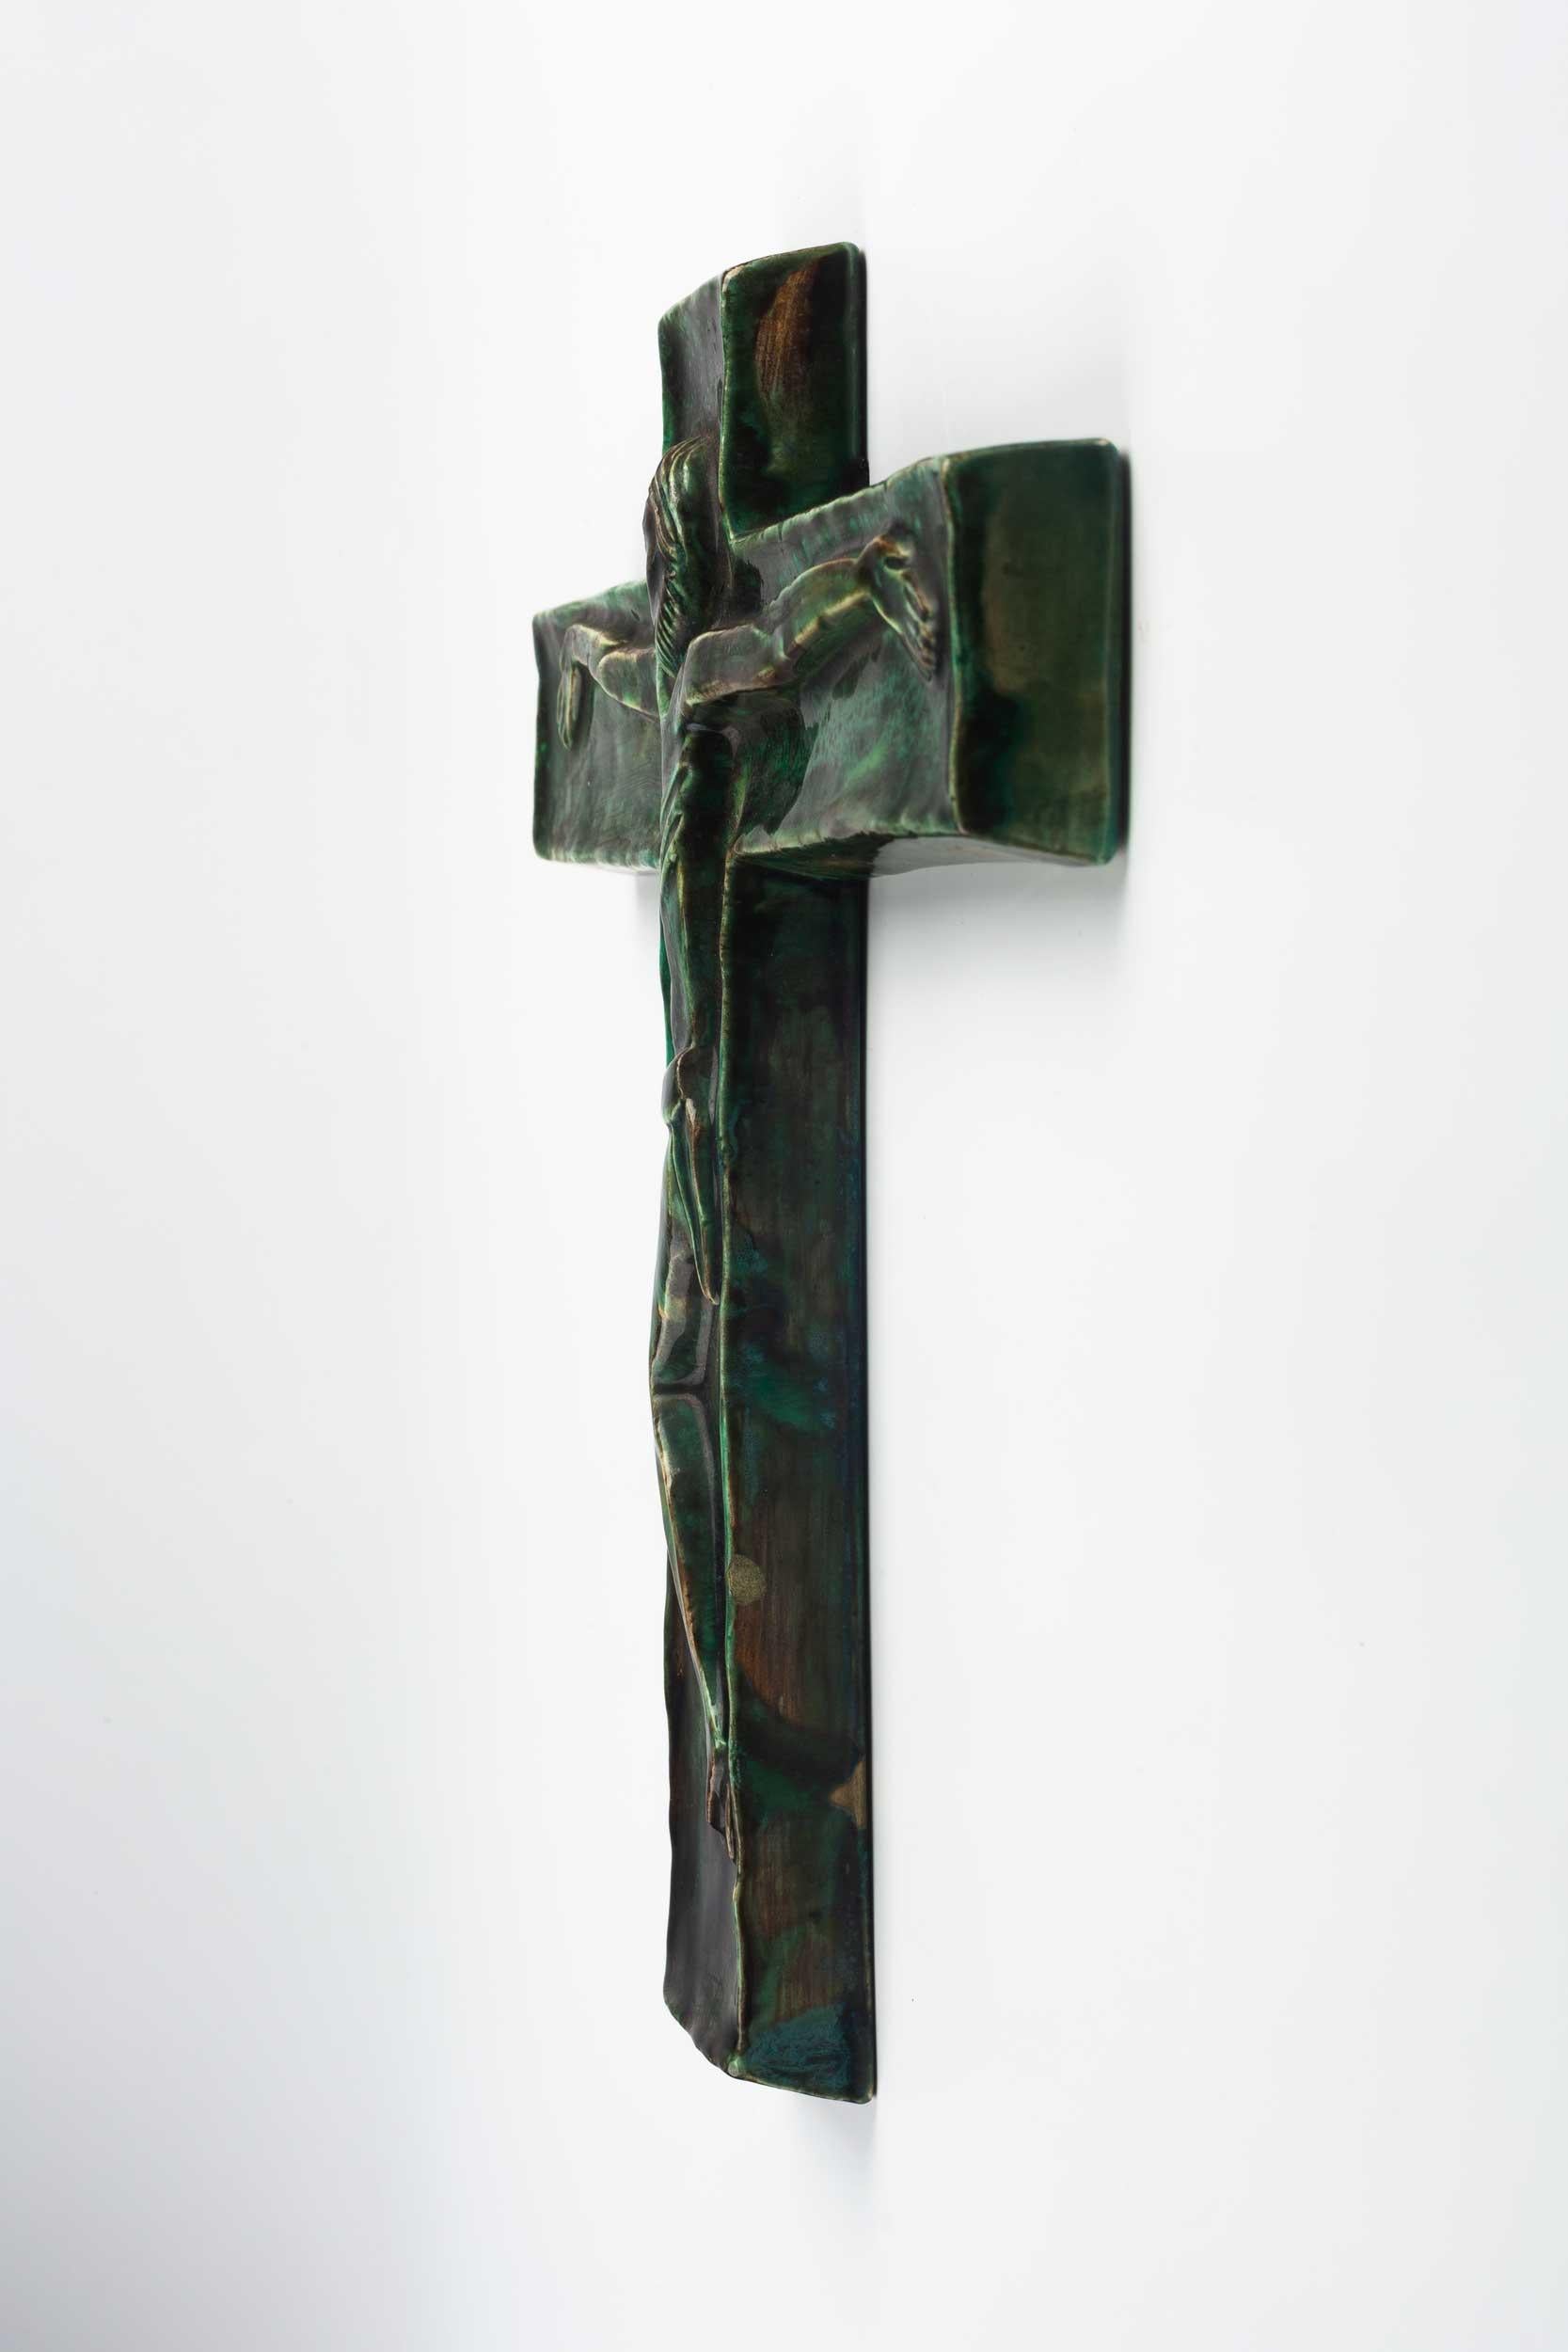 Midcentury Religious European Crucifix, Green, 1970s For Sale 2